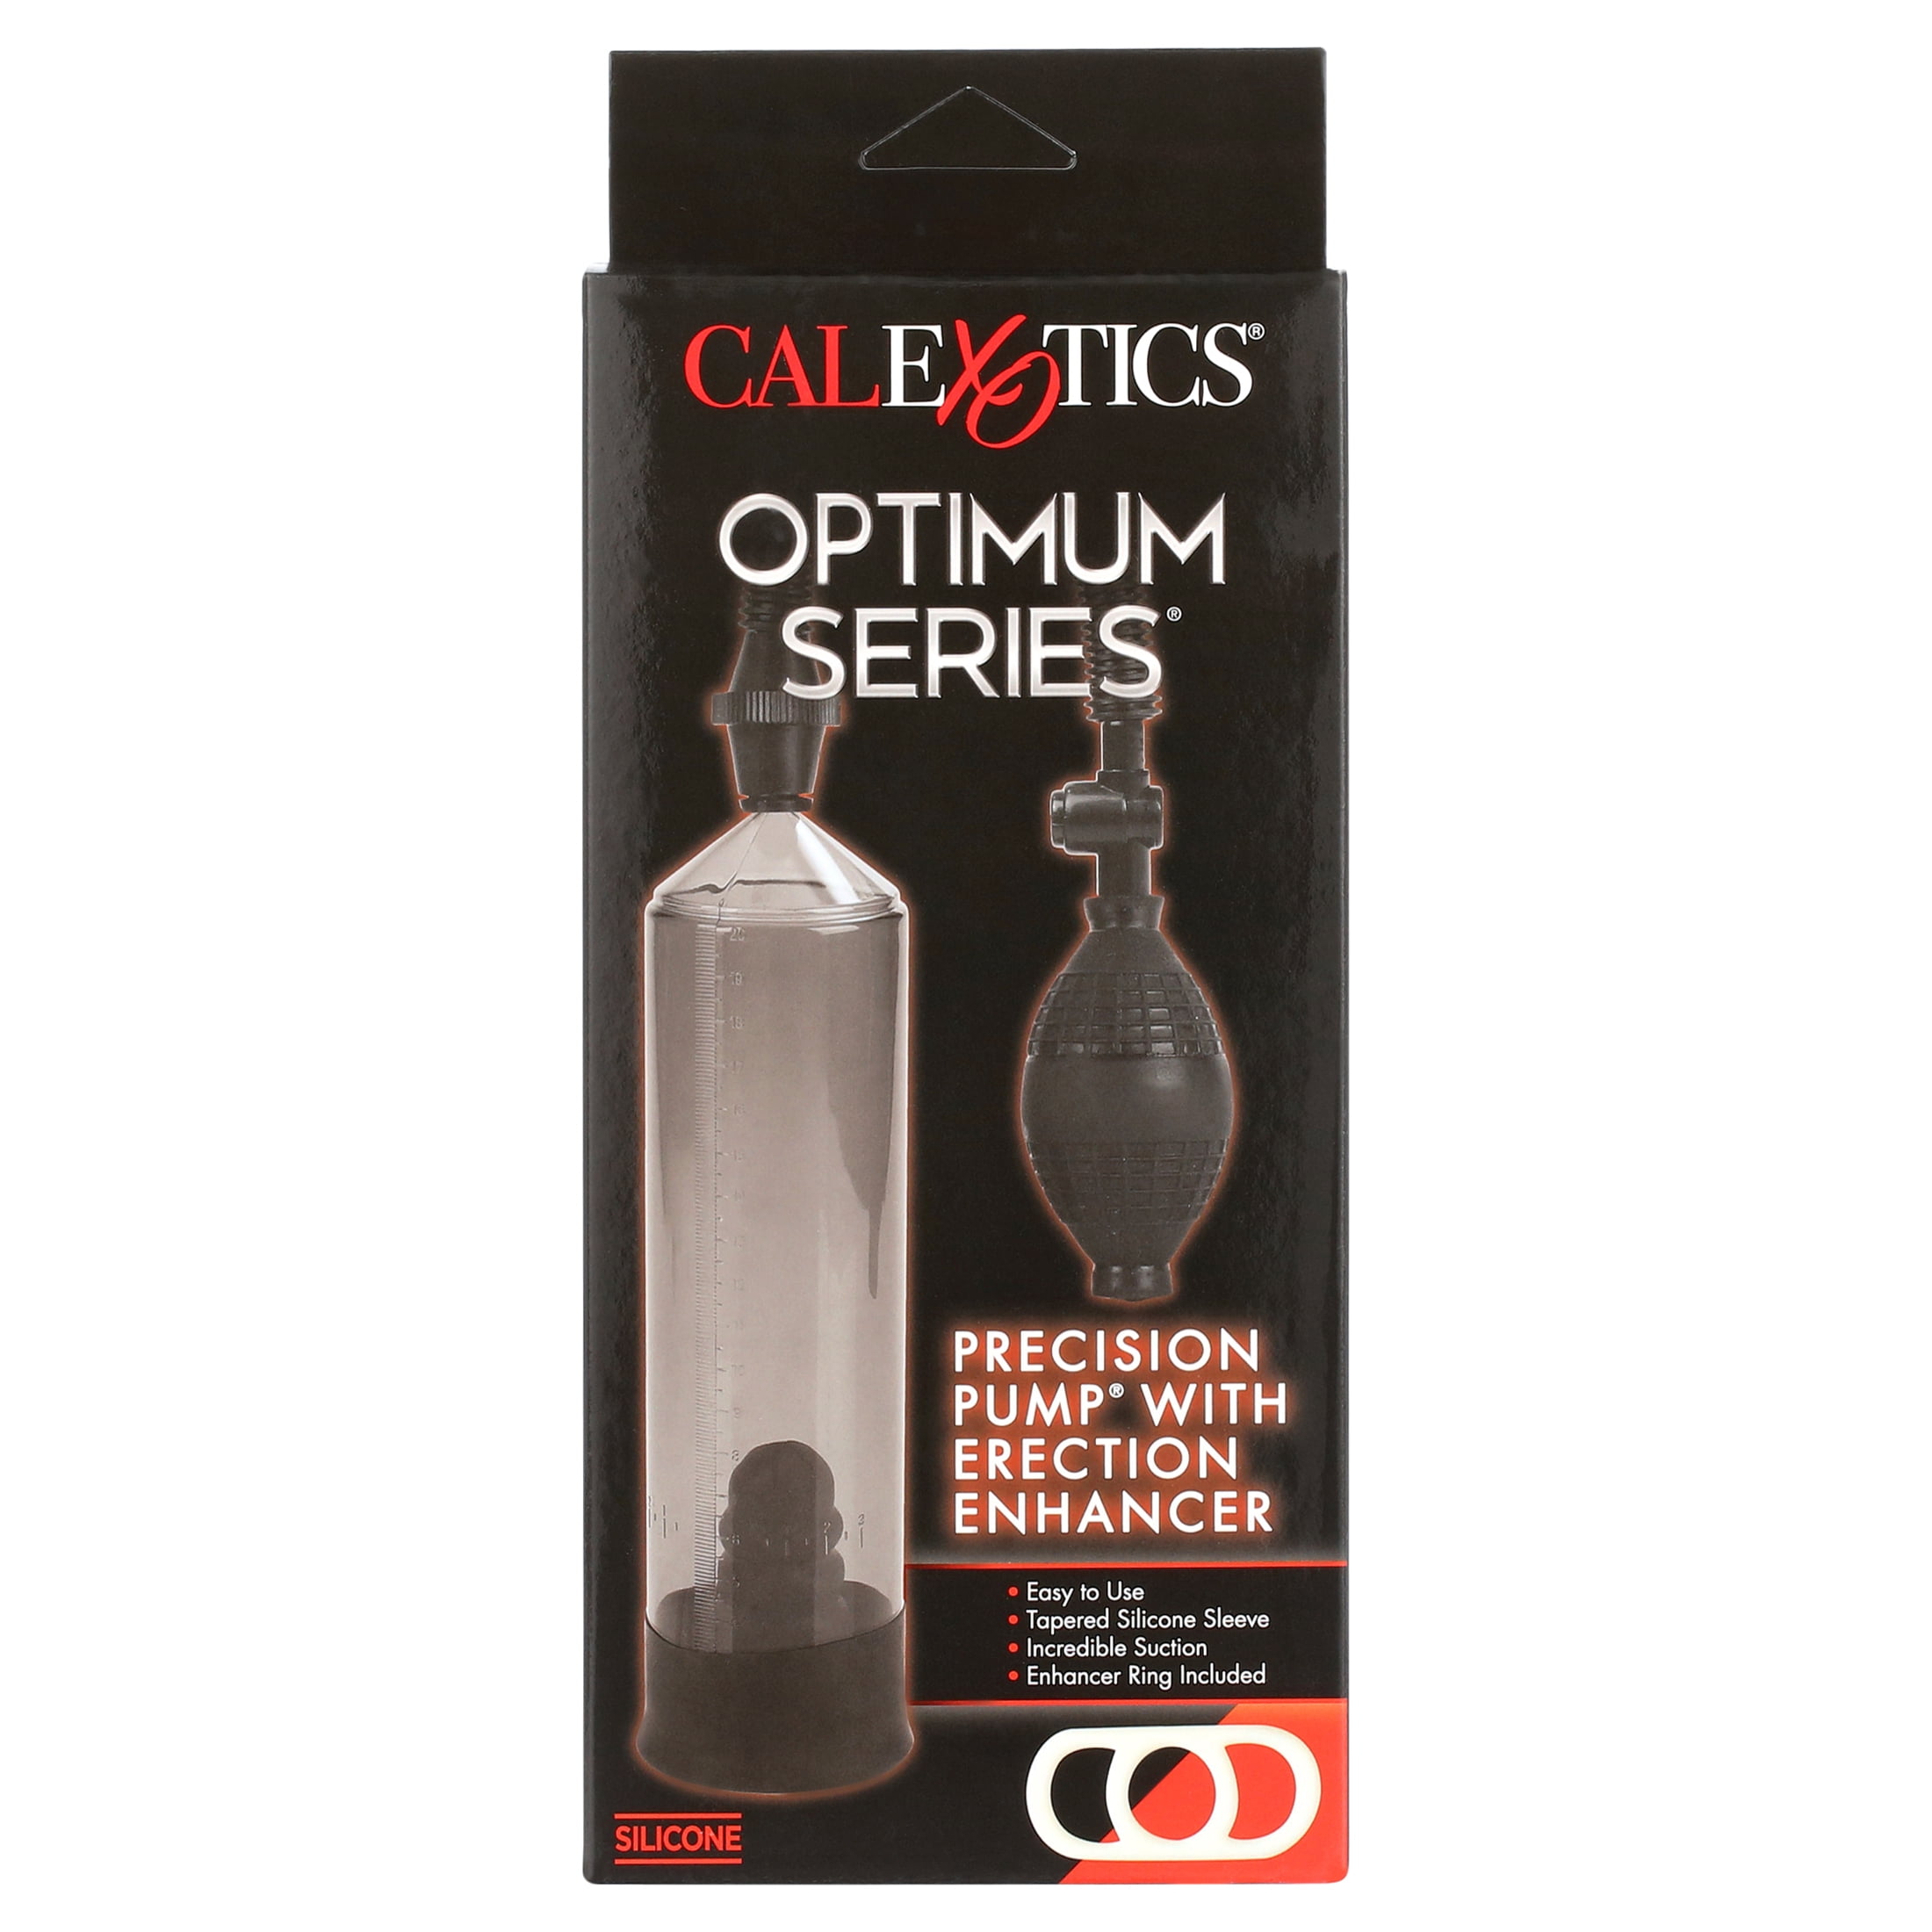 CalExotics Precision Penis Pump With Erection Enhancer picture